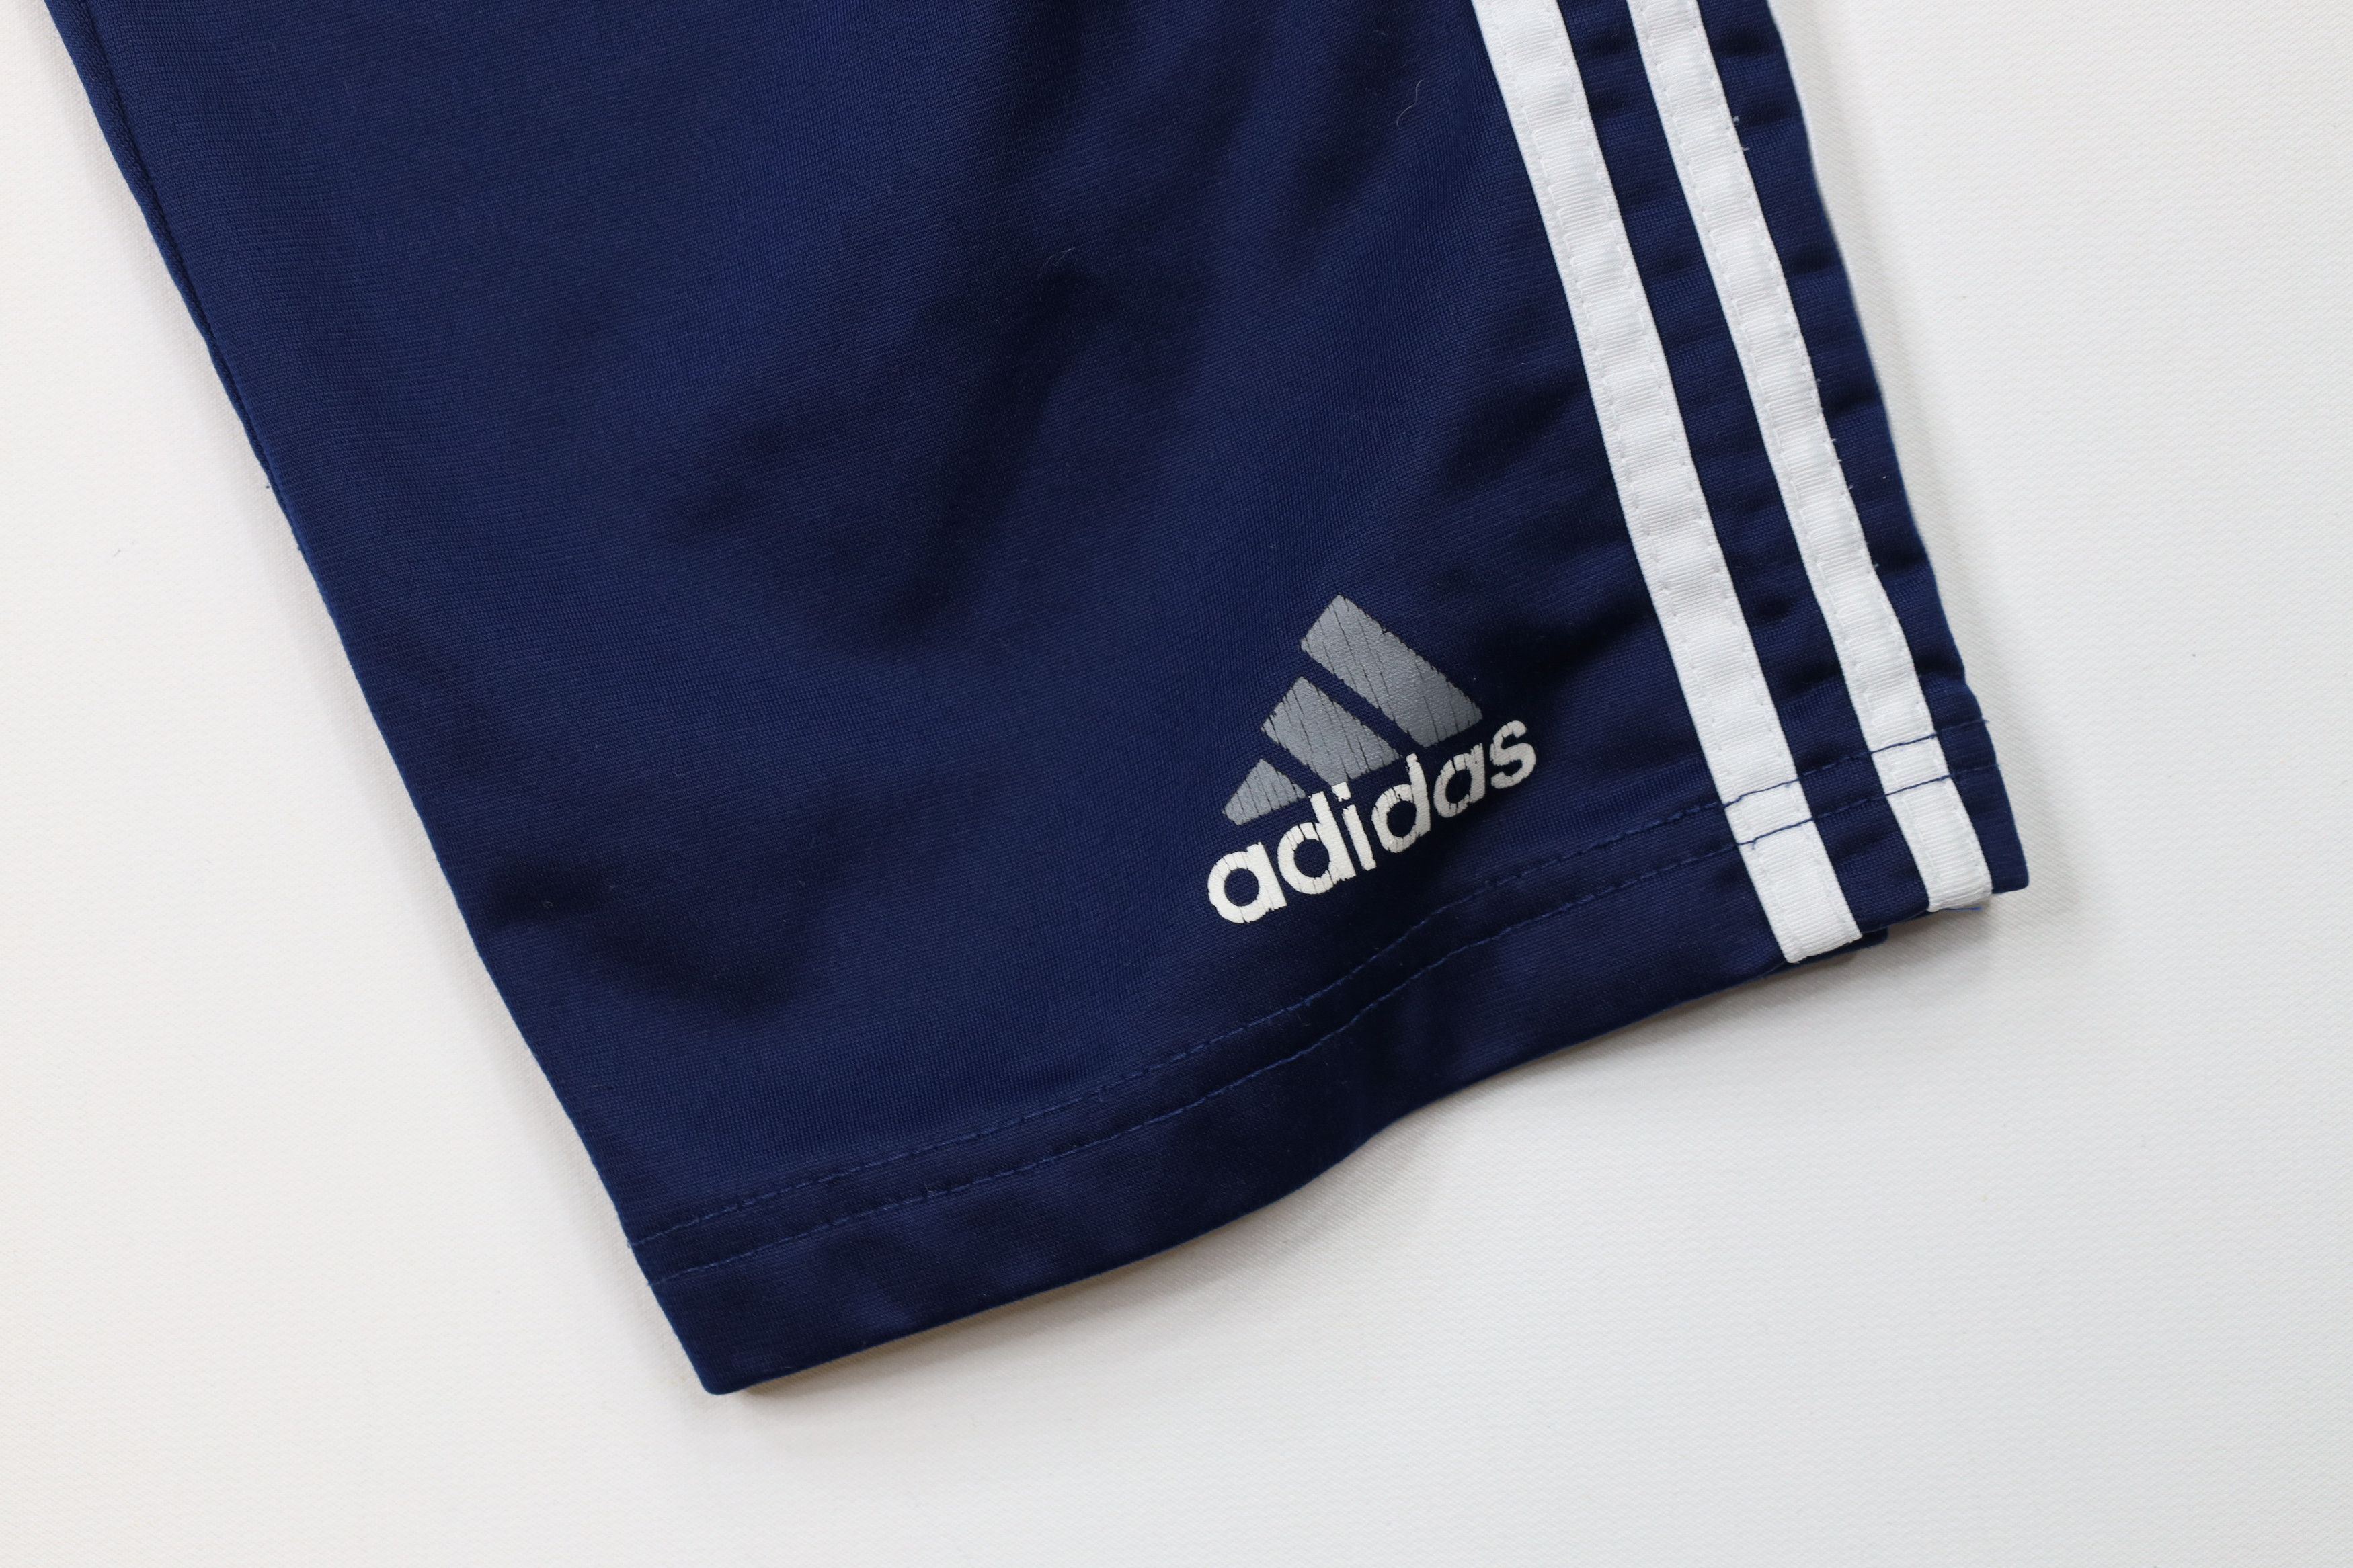 Adidas Vintage 90s Adidas Striped Tearaway Sweatpants Pants Blue Size US 34 / EU 50 - 5 Thumbnail